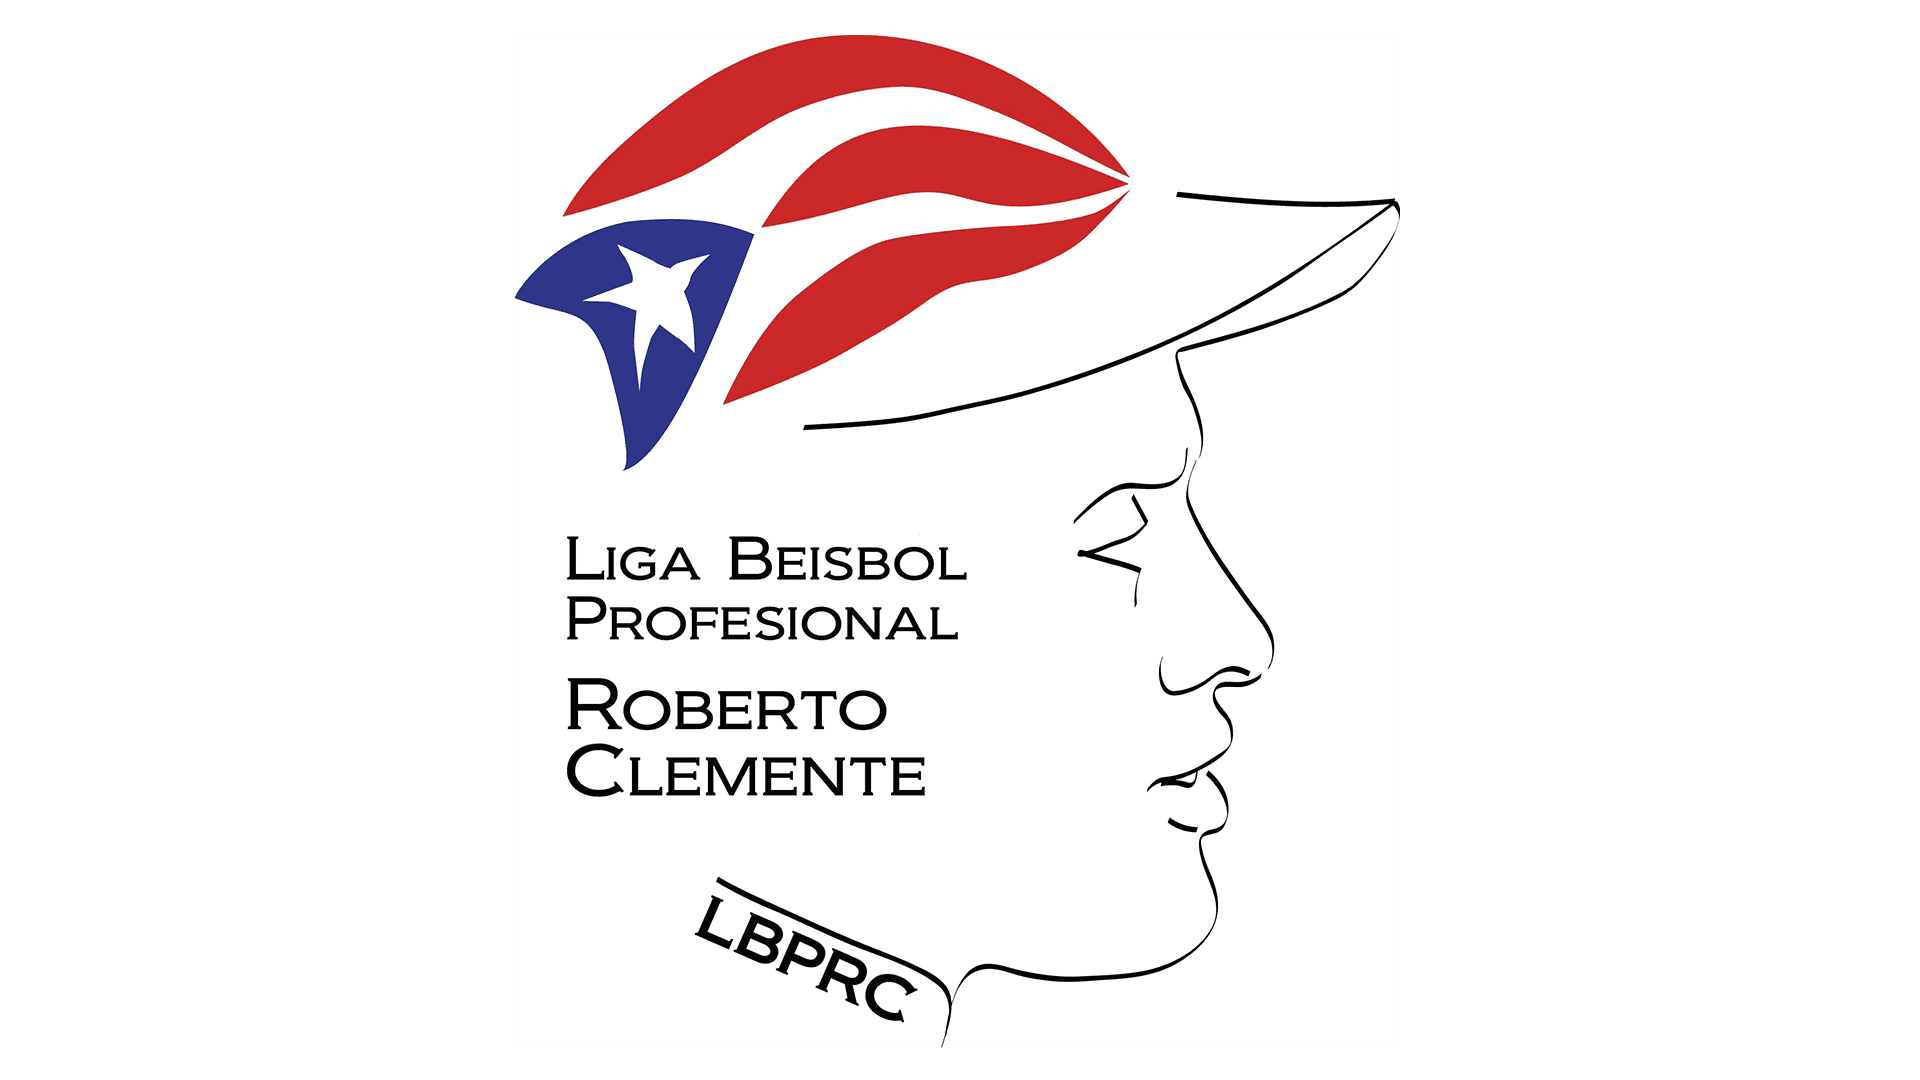 Liga de Béisbol Profesional Roberto Clemente logo and symbol, meaning,  history, PNG, brand